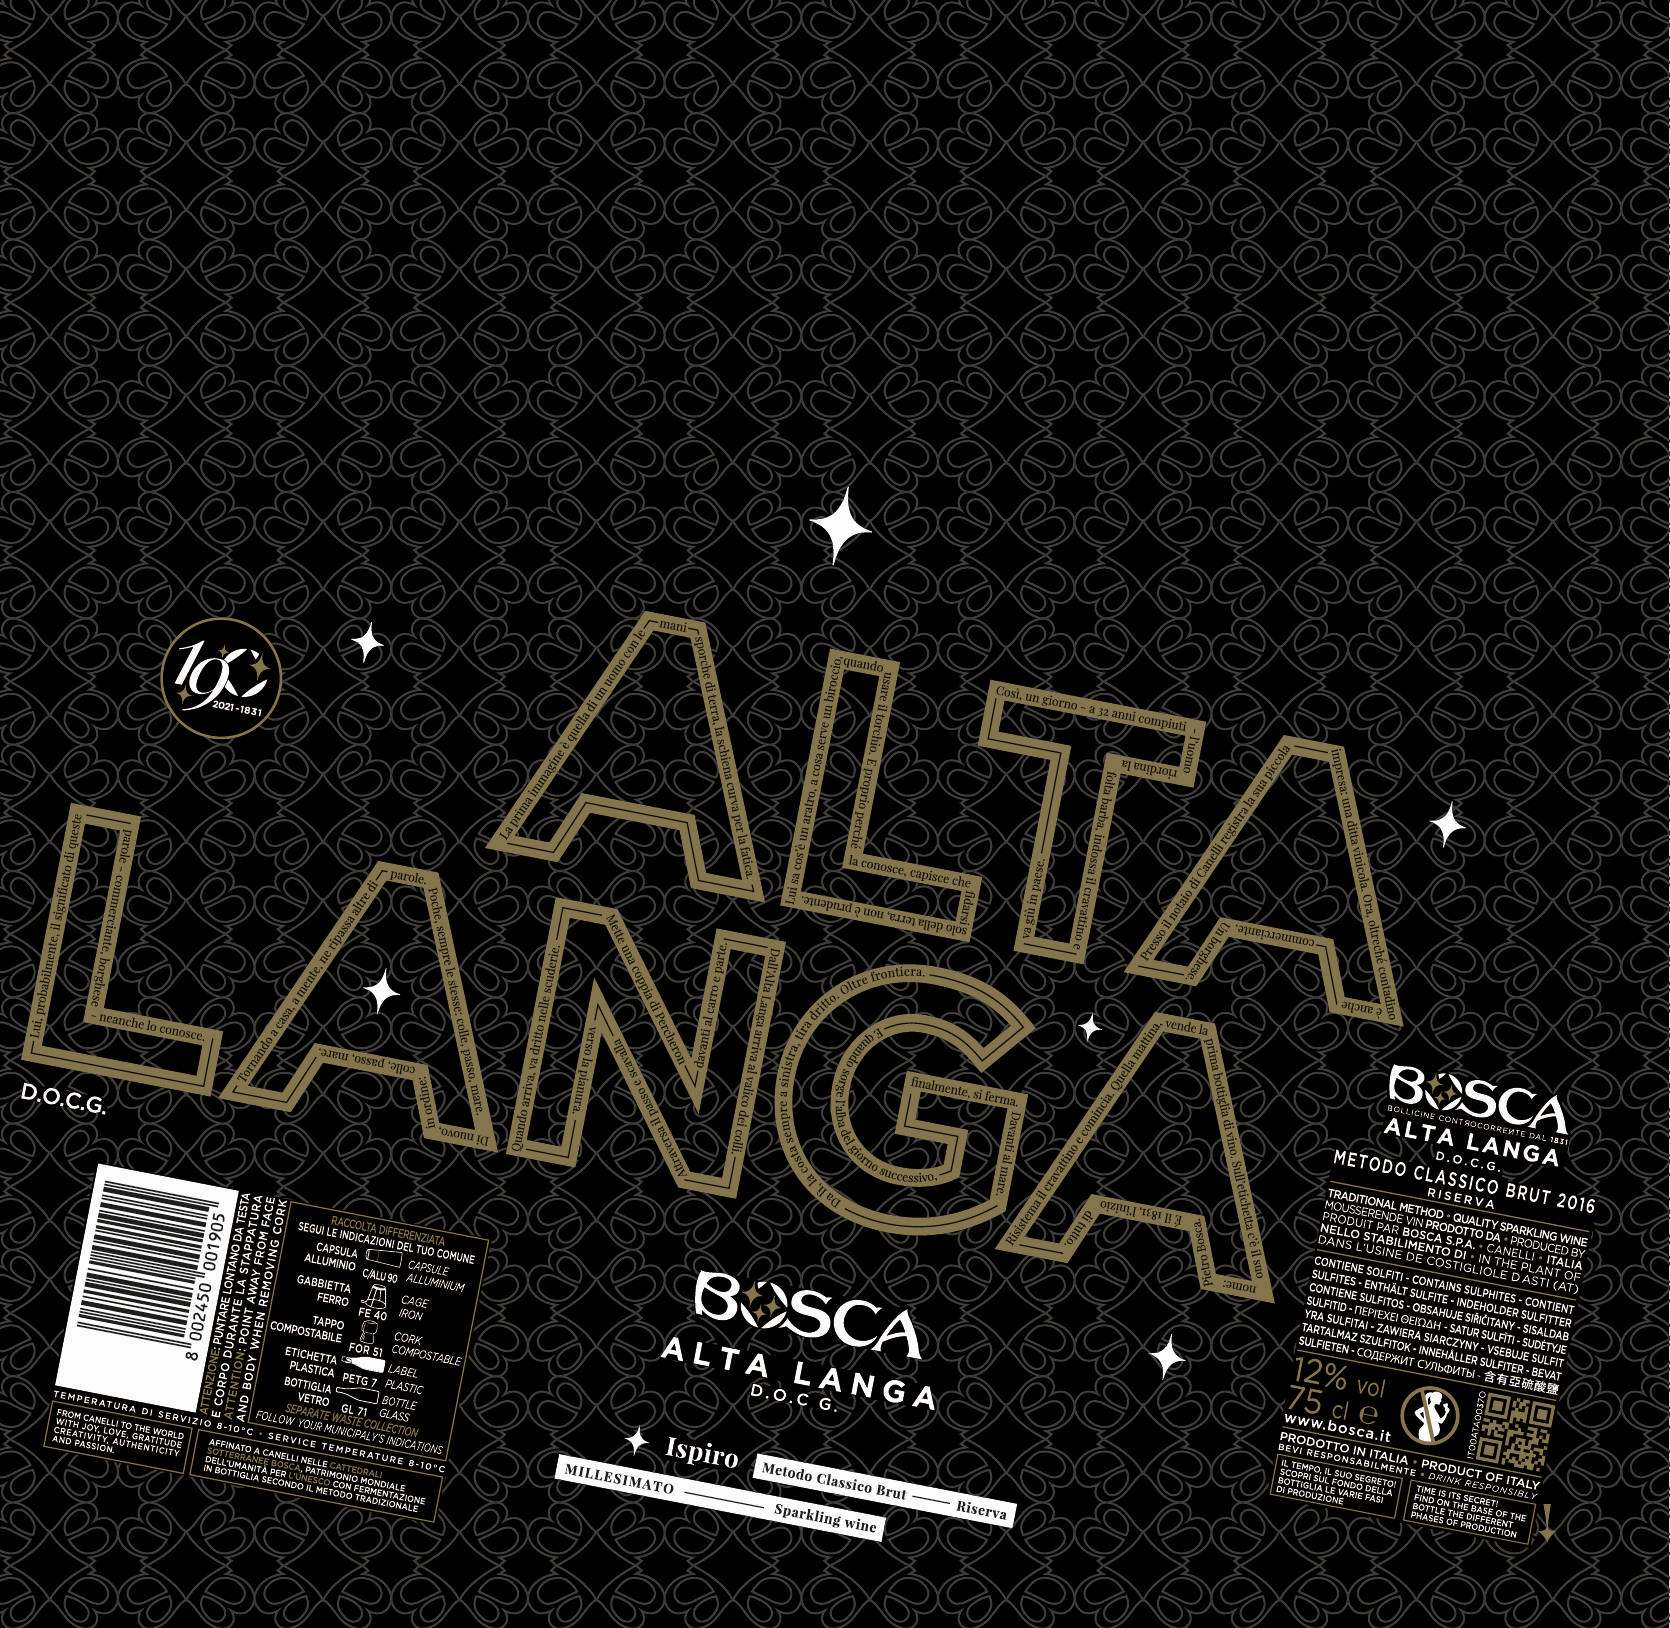 Alta Langa DOCG Ispiro - Bosca (etichetta)